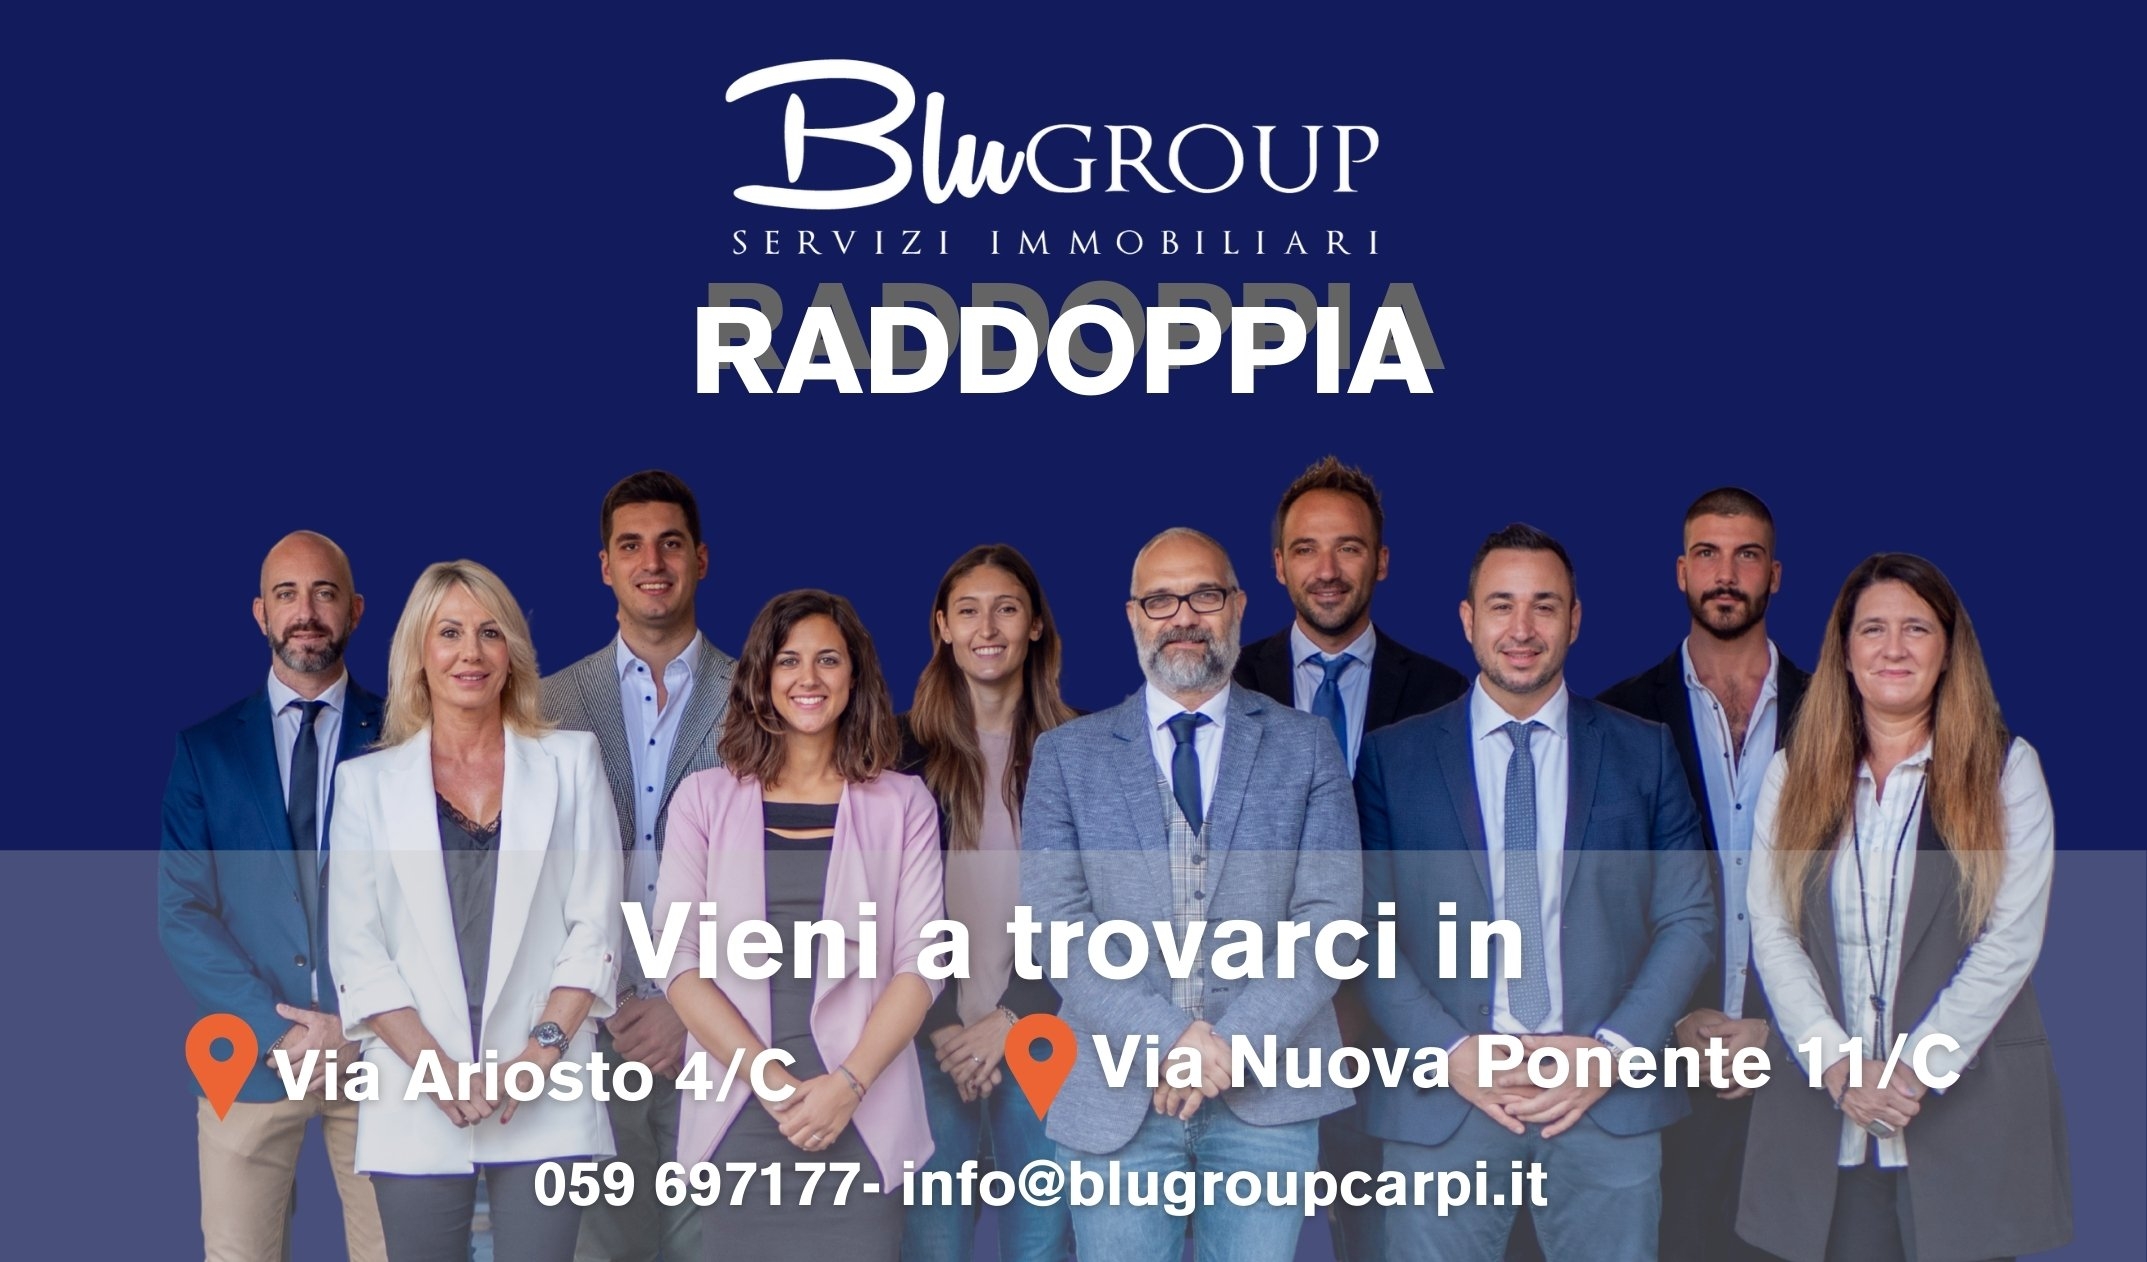 Immobiliare Blu Group Carpi